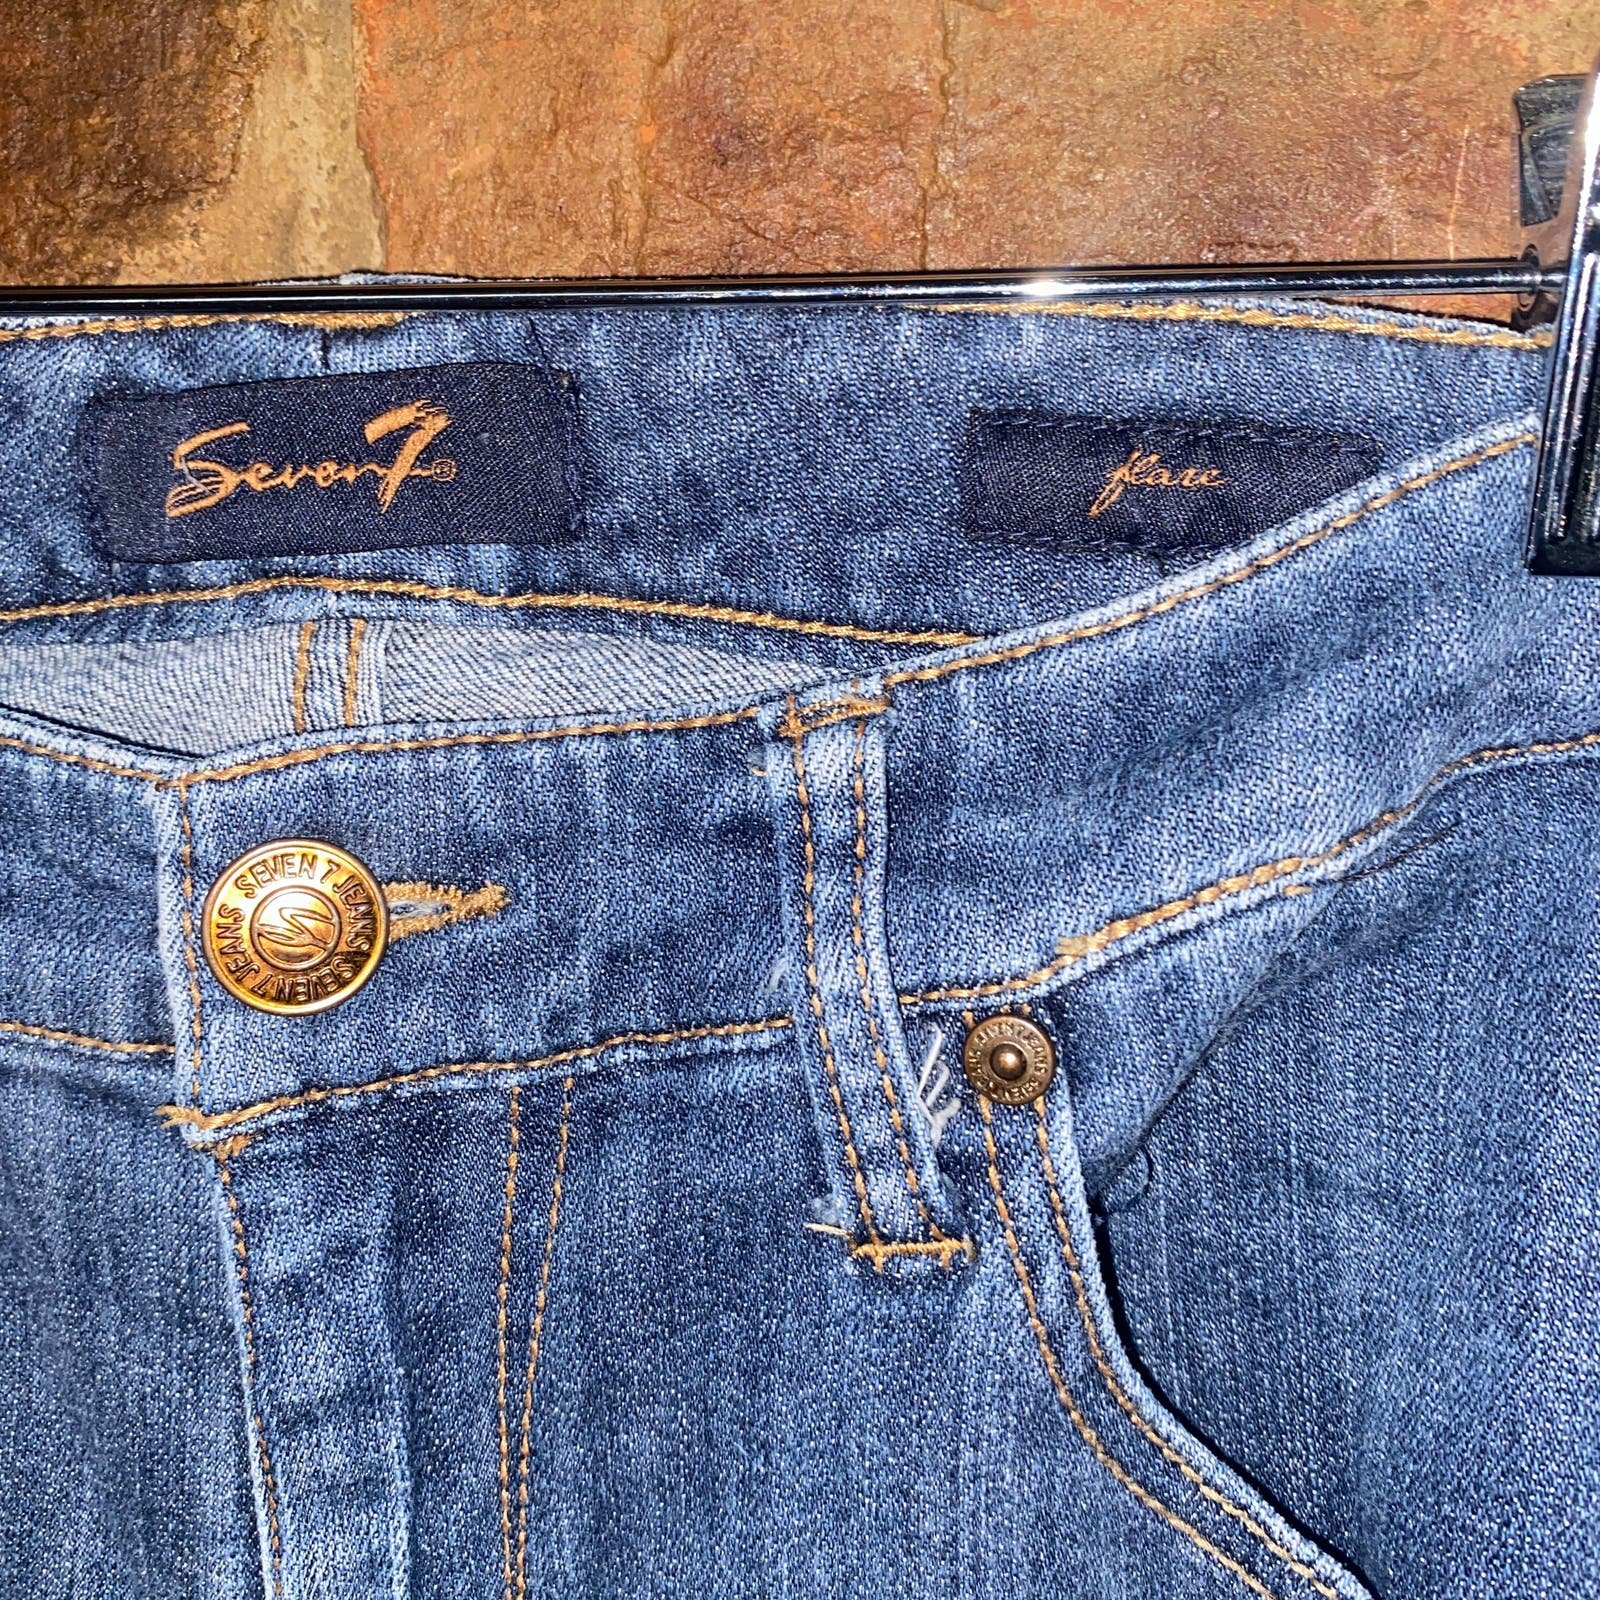 reasonable price Seven7 Medium Wash Blue Denim Flare Jeans Women´s Size 10 fkqHjh8ud Fashion